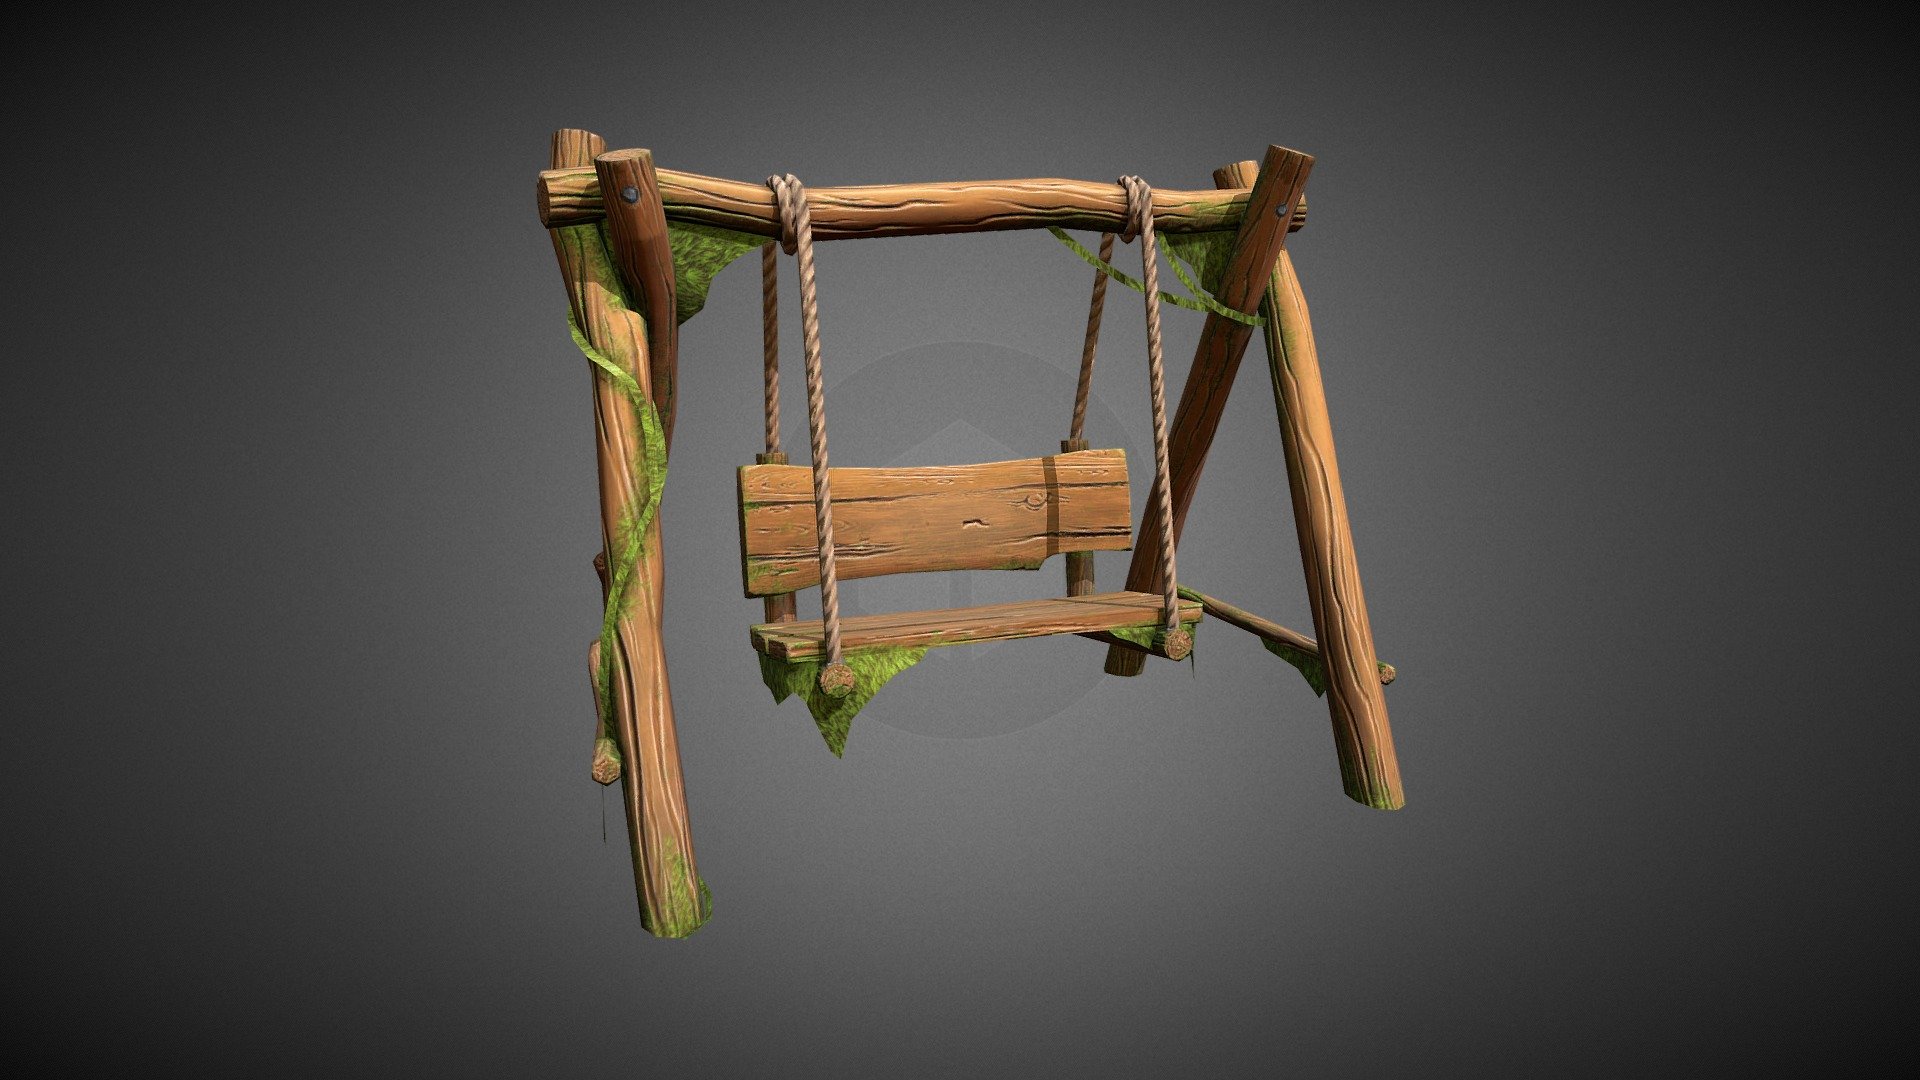 Stylized Wooden Bench

Game ready asset - Stylized Wooden Bench - 3D model by FinchViz (@Zieba_Super) 3d model